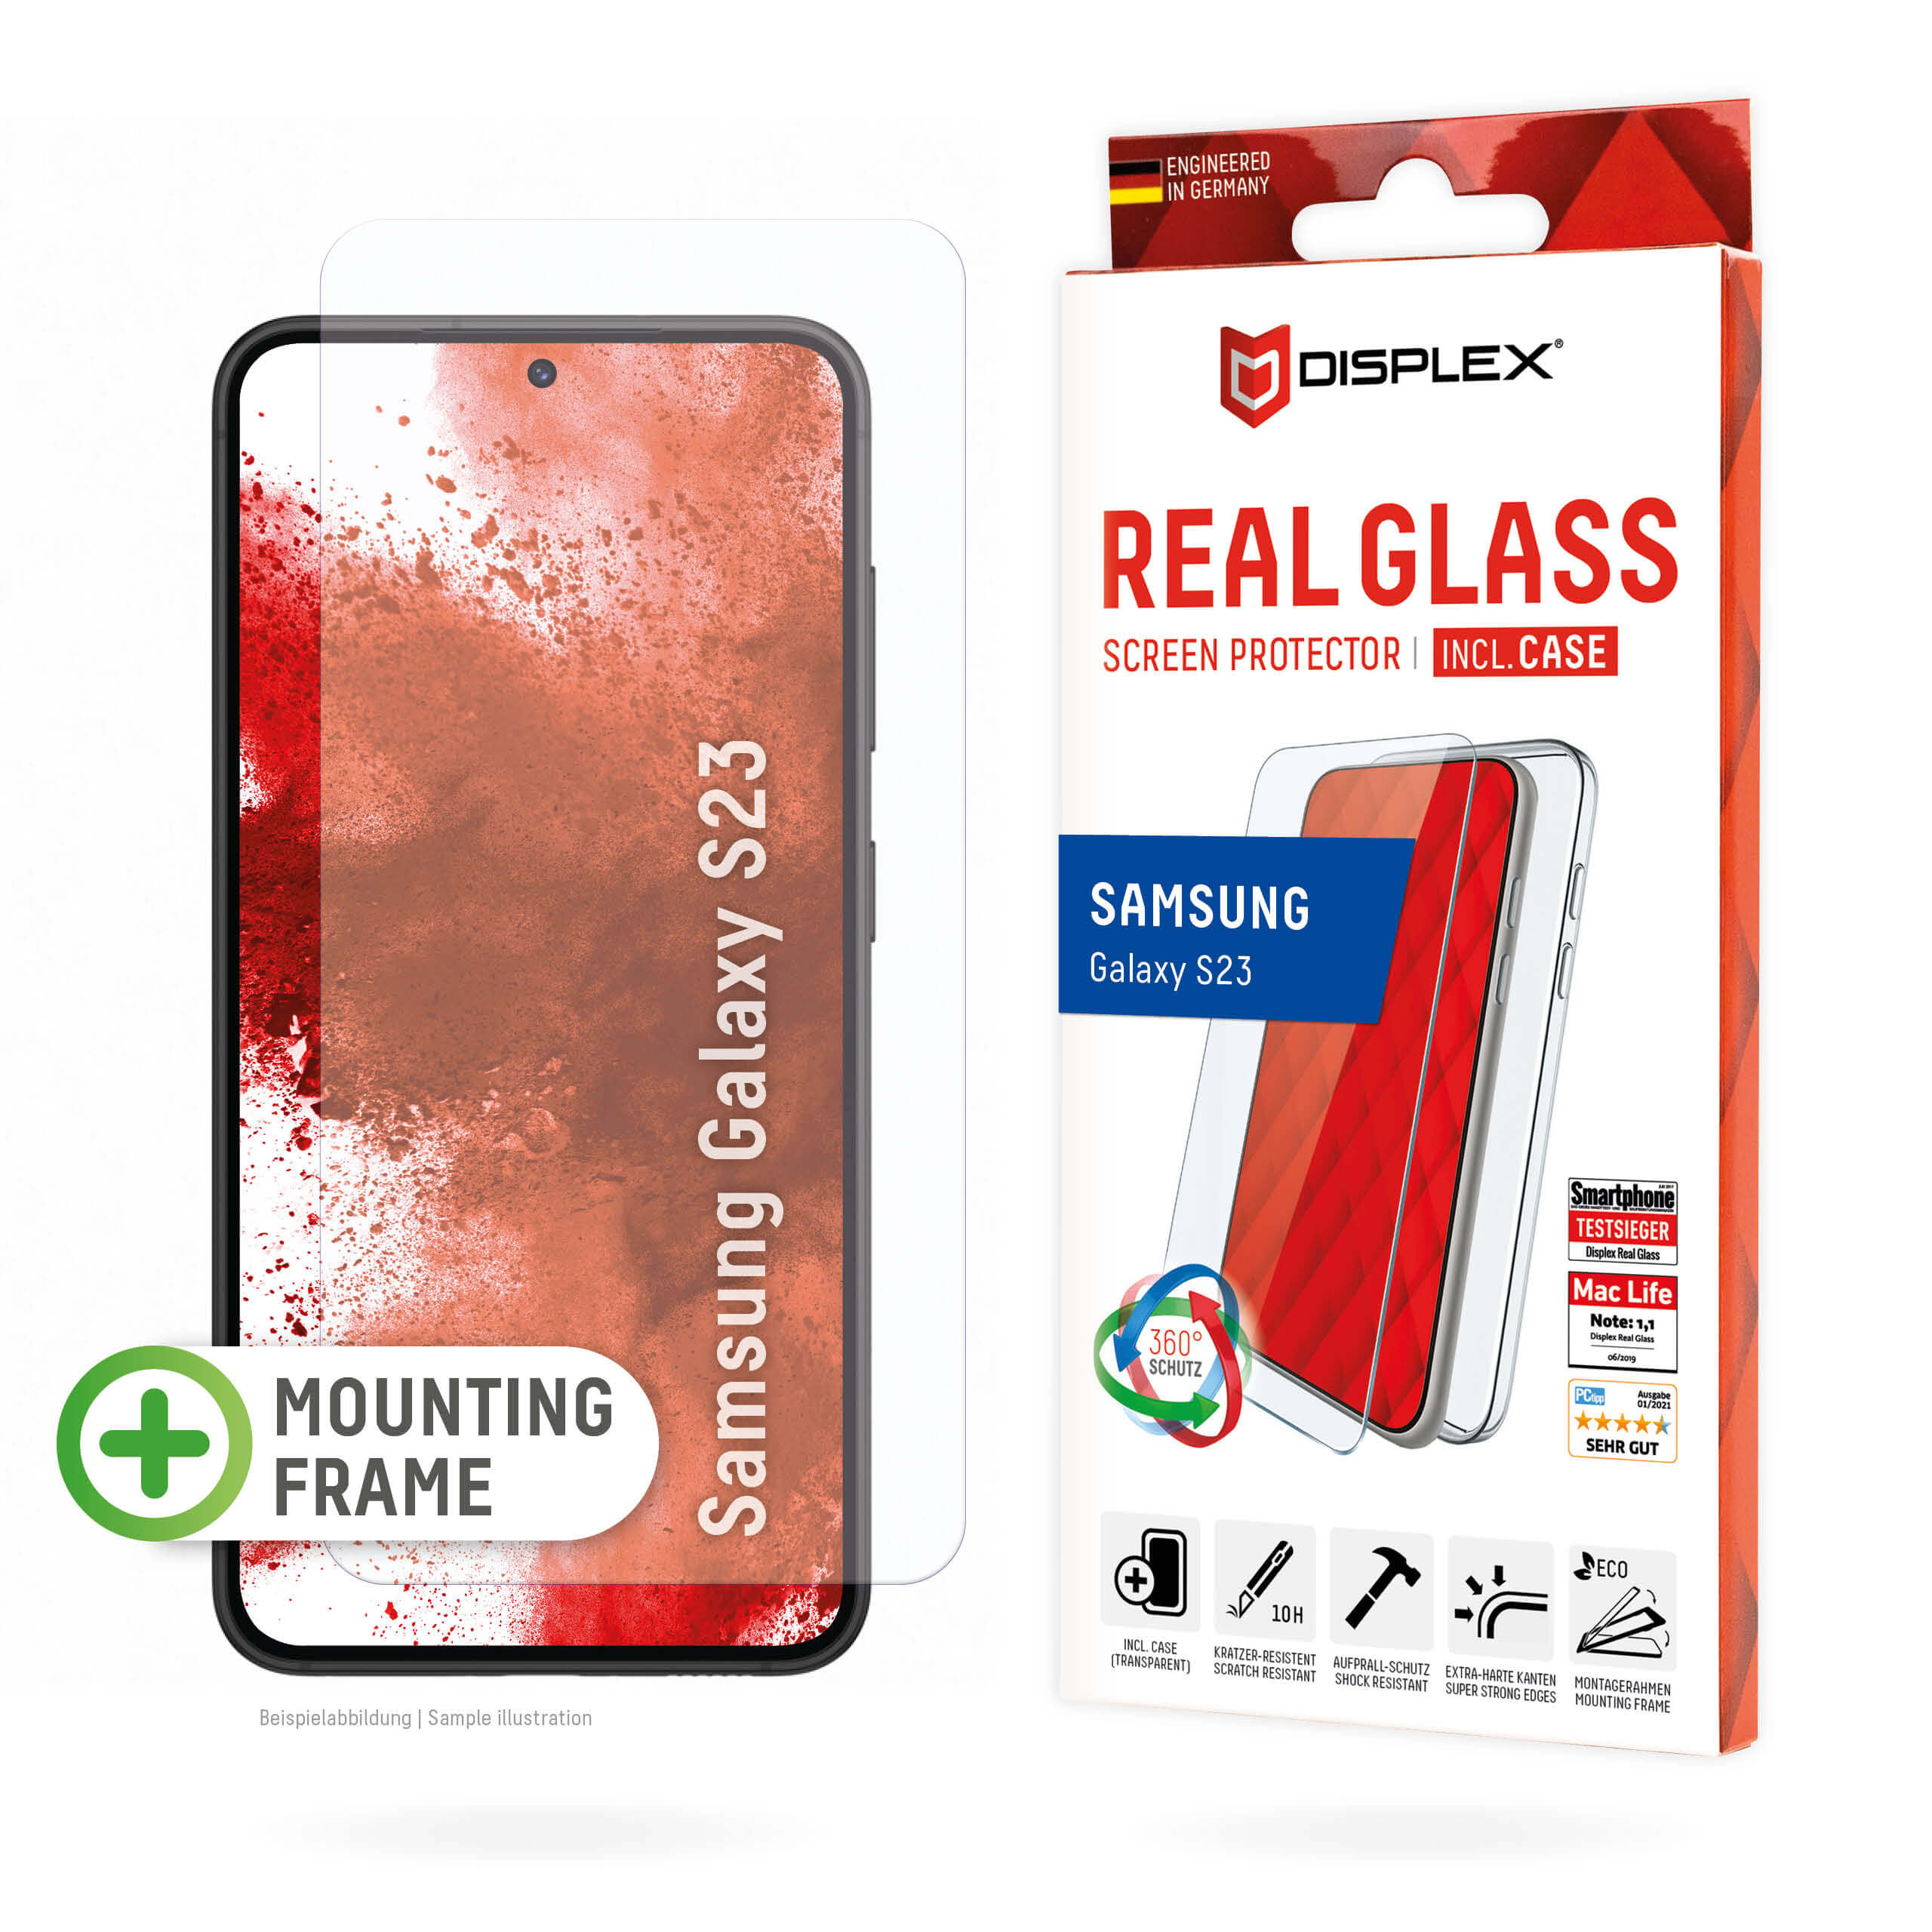 01778-Samsung-Galaxy-S23-Real-Glass-Case-2D-ENZ2scSrKuej9nt